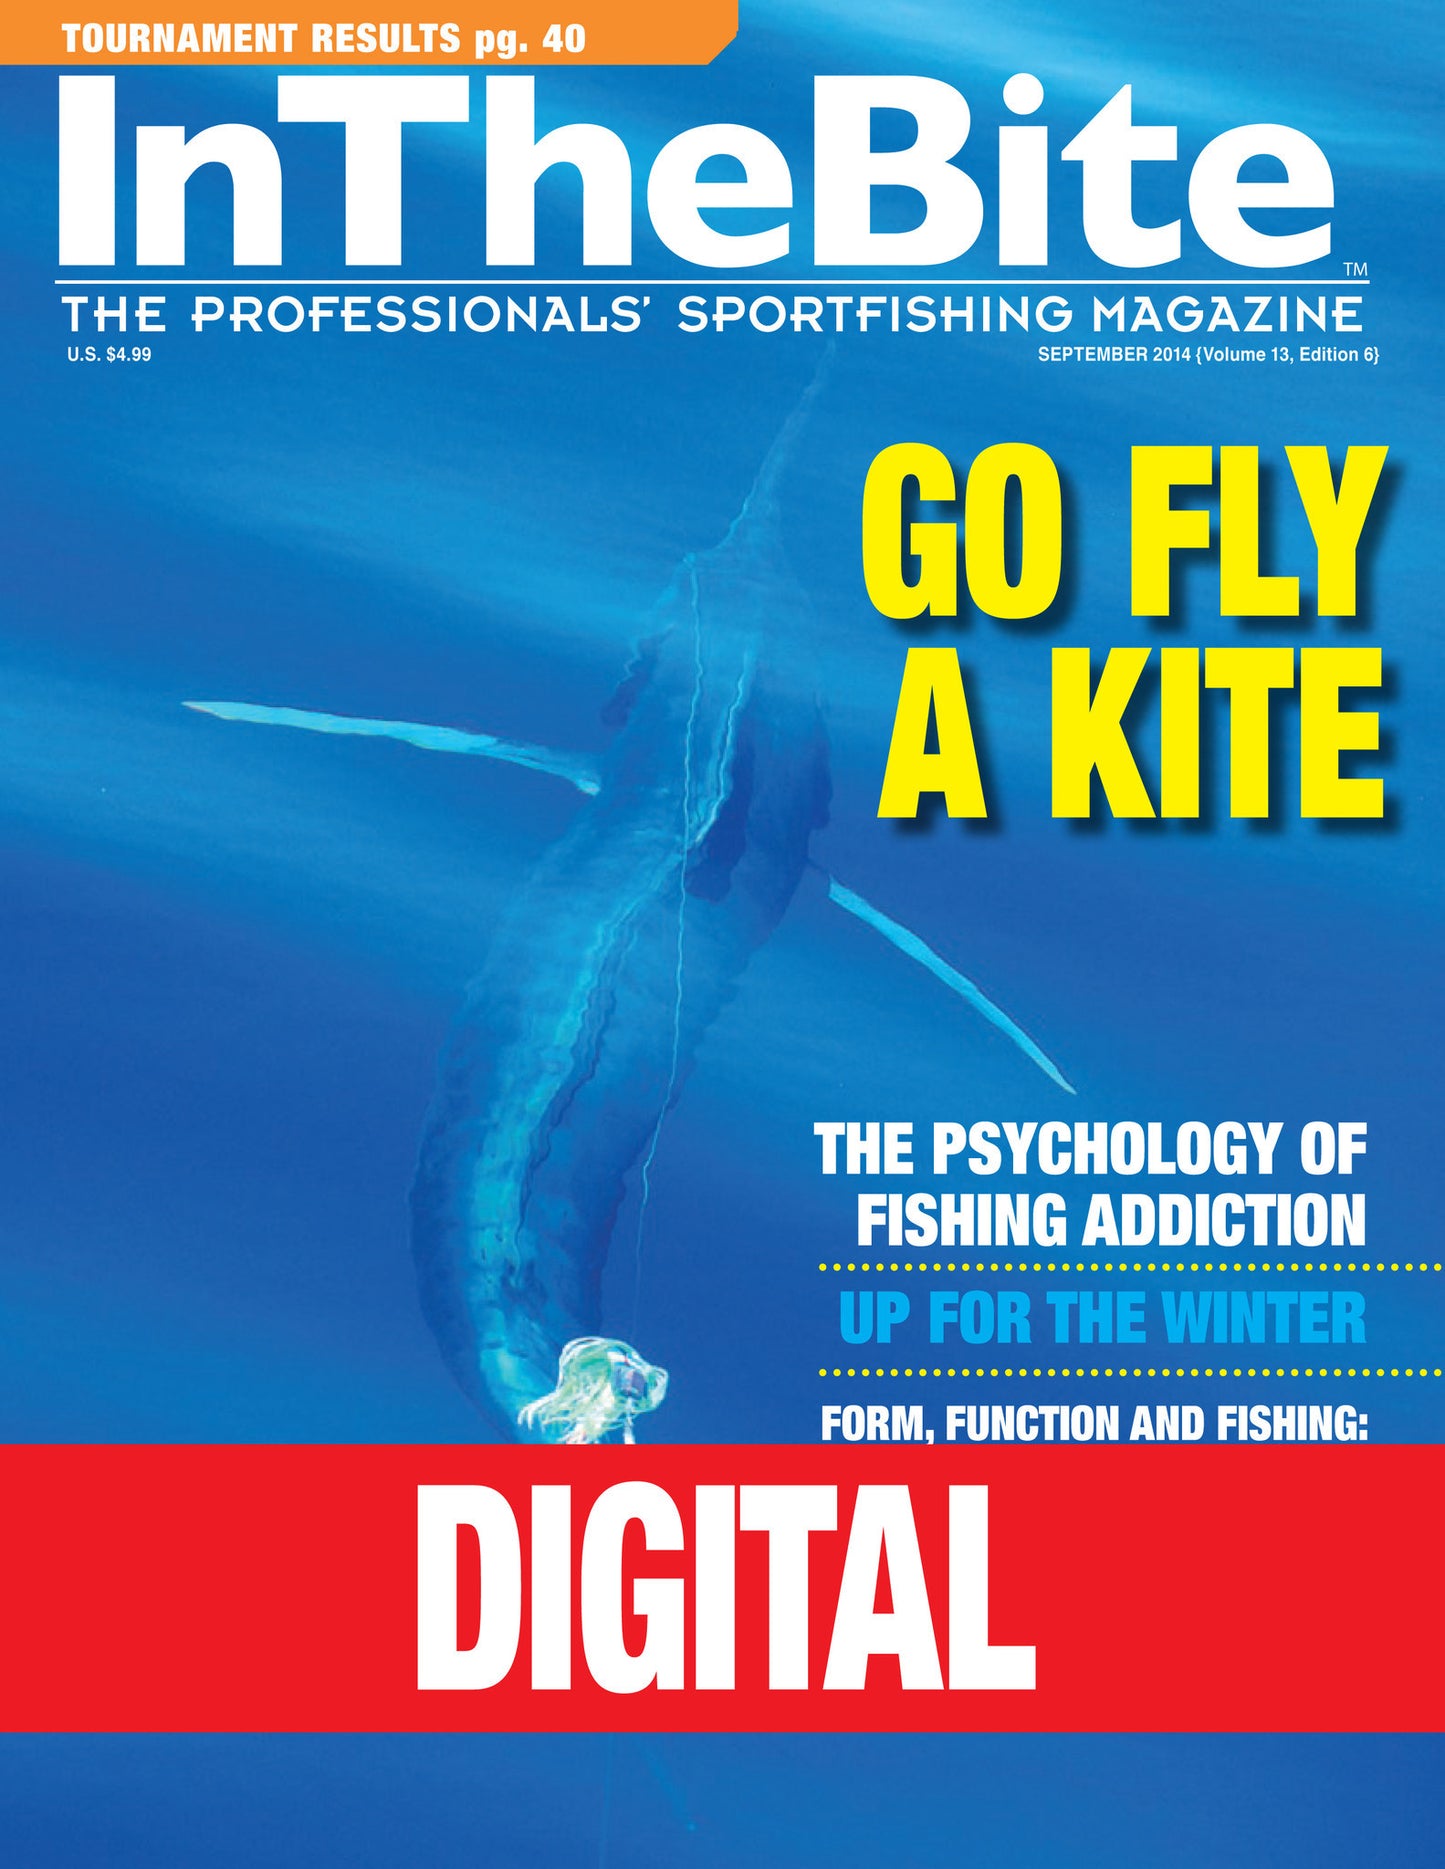 InTheBite Volume 13 Edition 08 - December Issue - Digital Edition